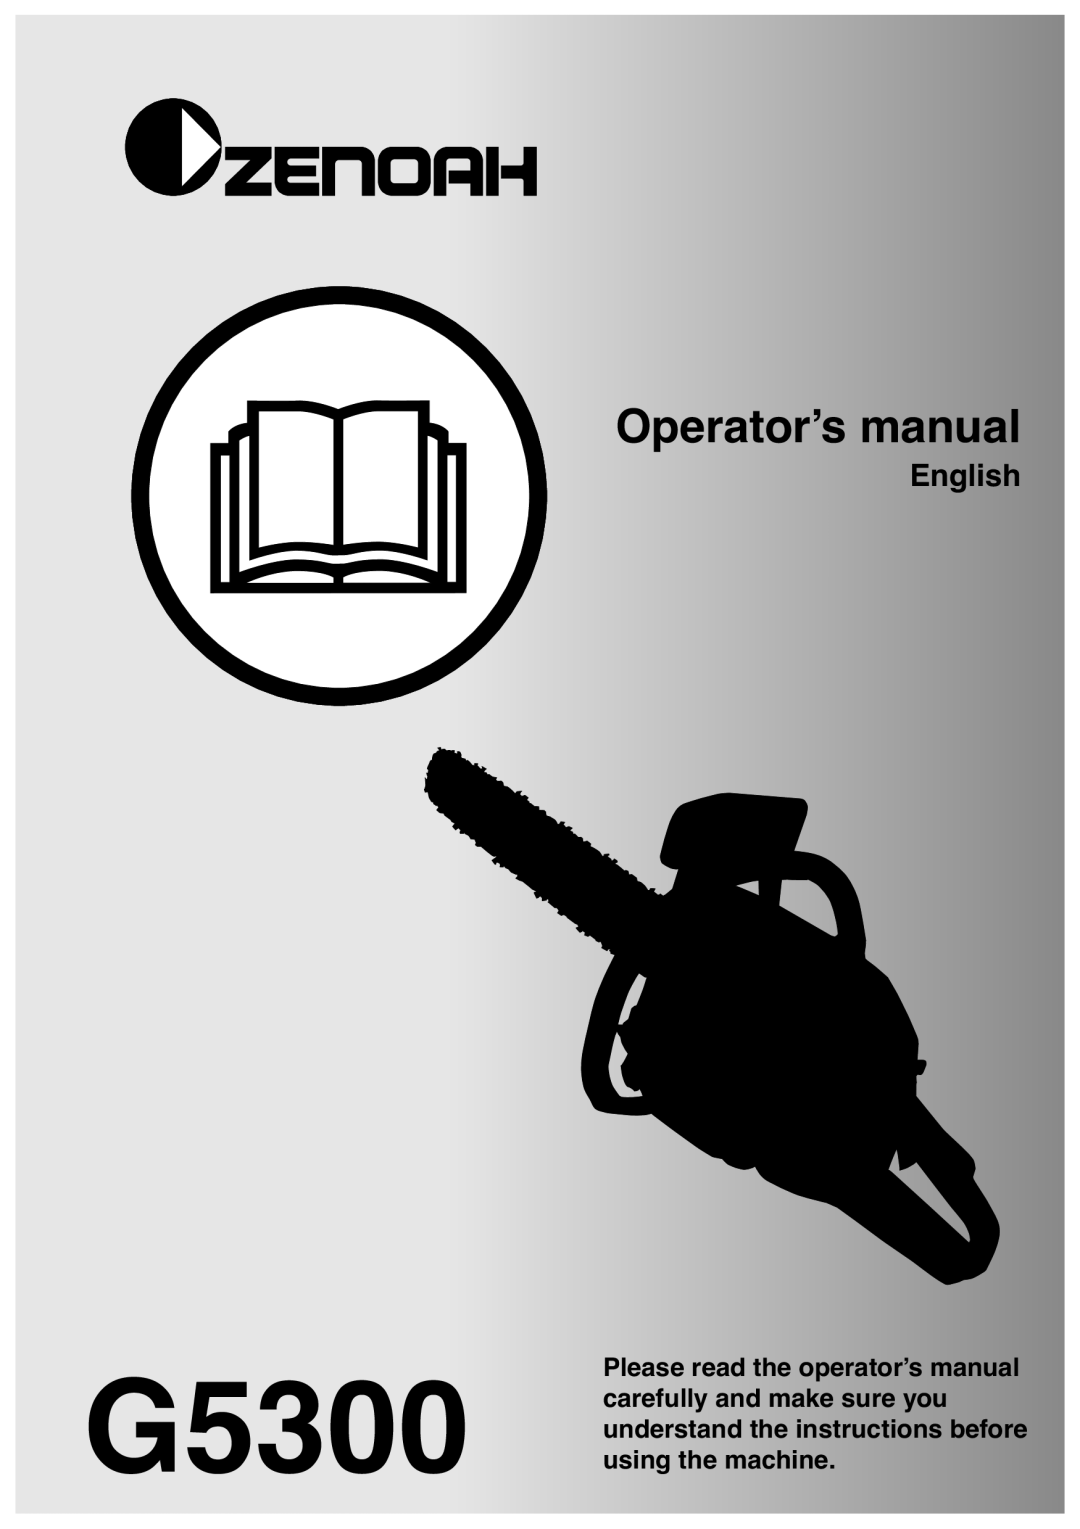 Zenoah G5300 manual English, Operator’s manual, Please read the operator’s manual, using the machine 